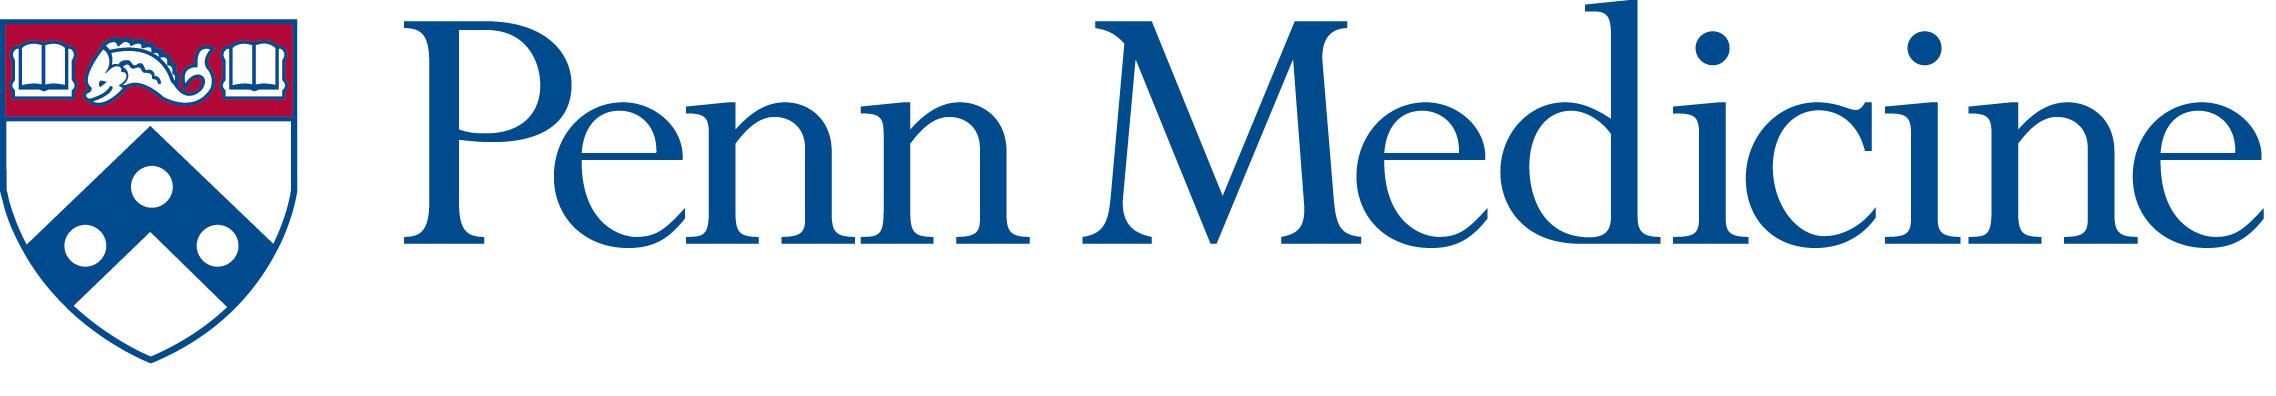 Penn Medicine Logo photo - 1